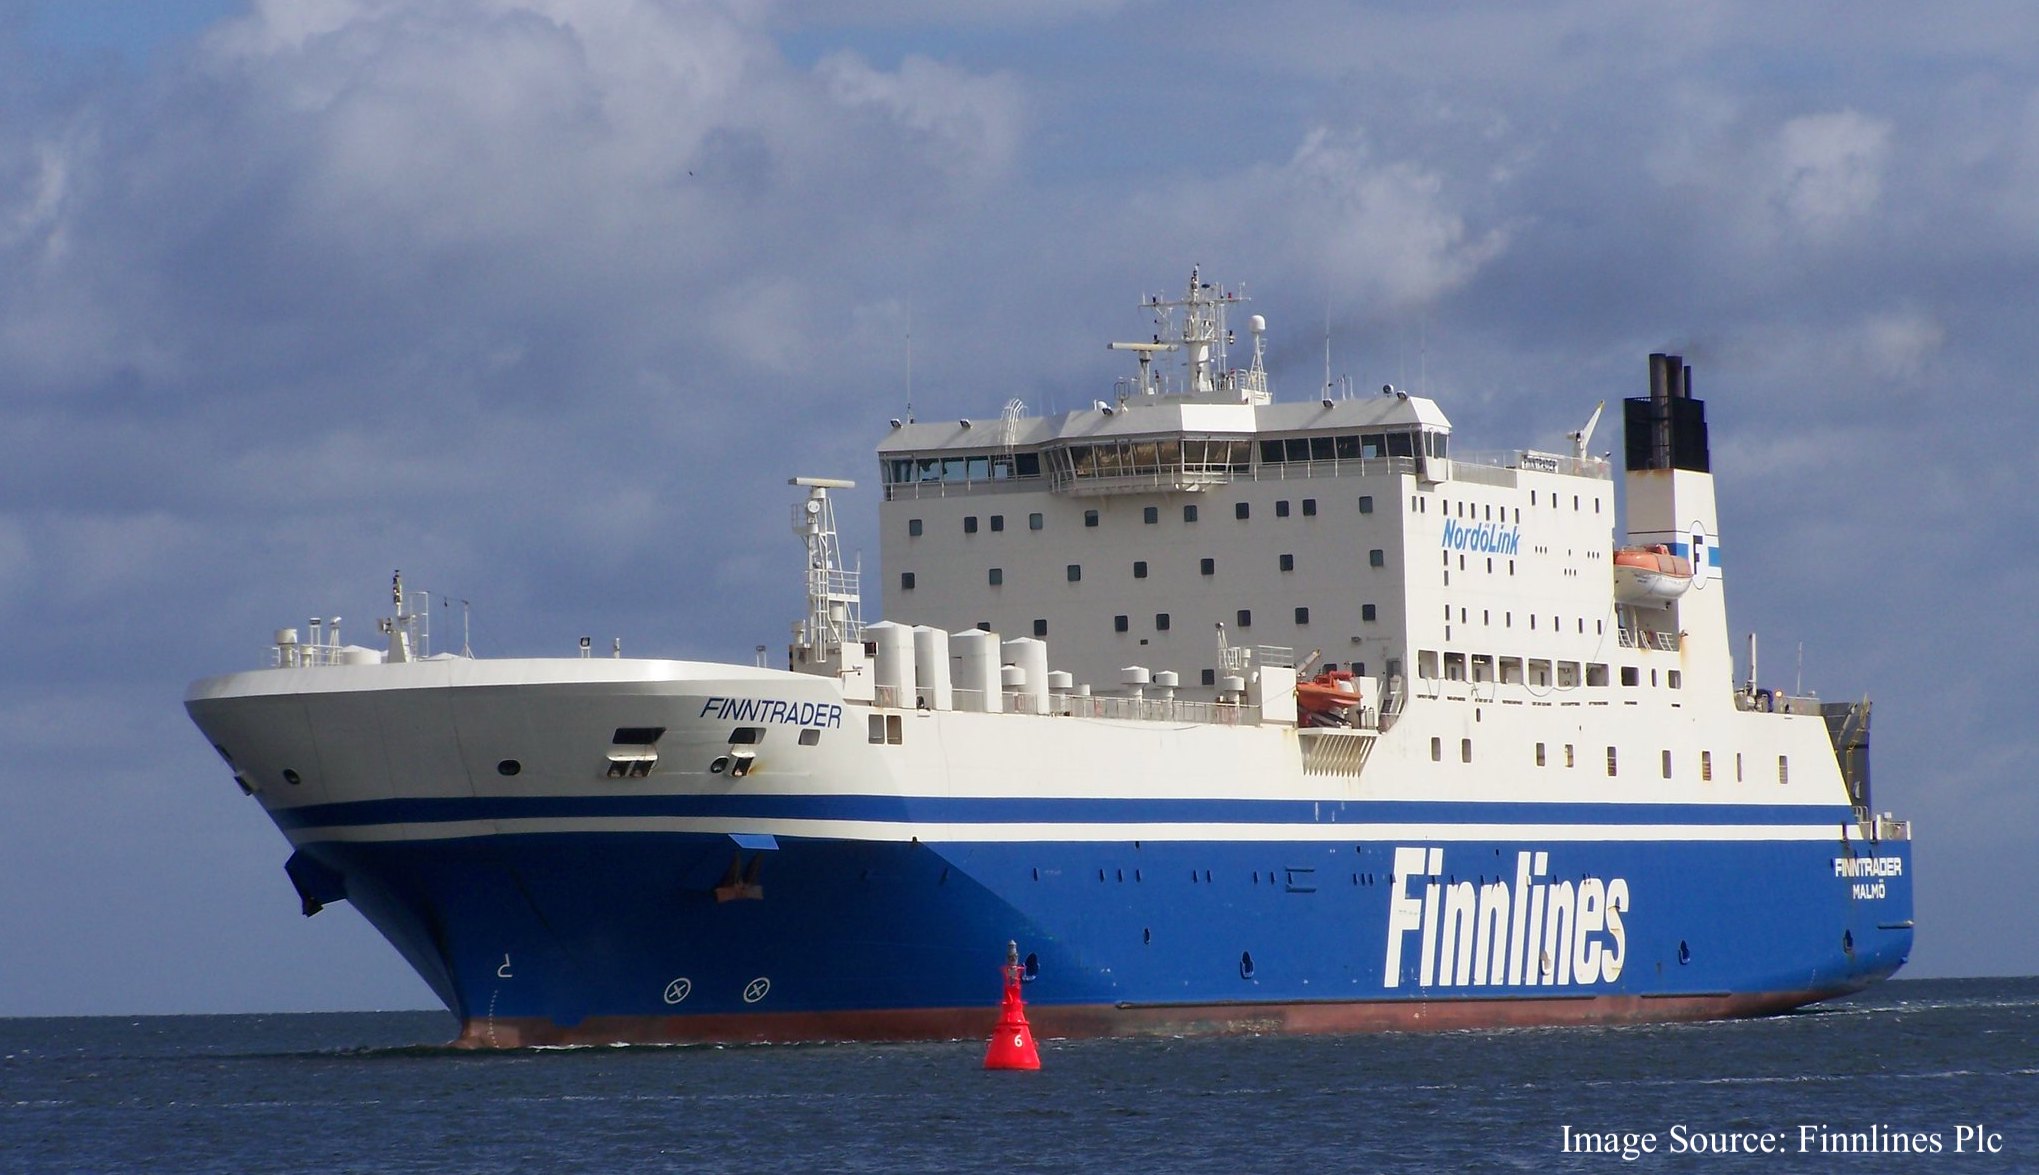 Fotografie a navei Finnlines - Finntrader